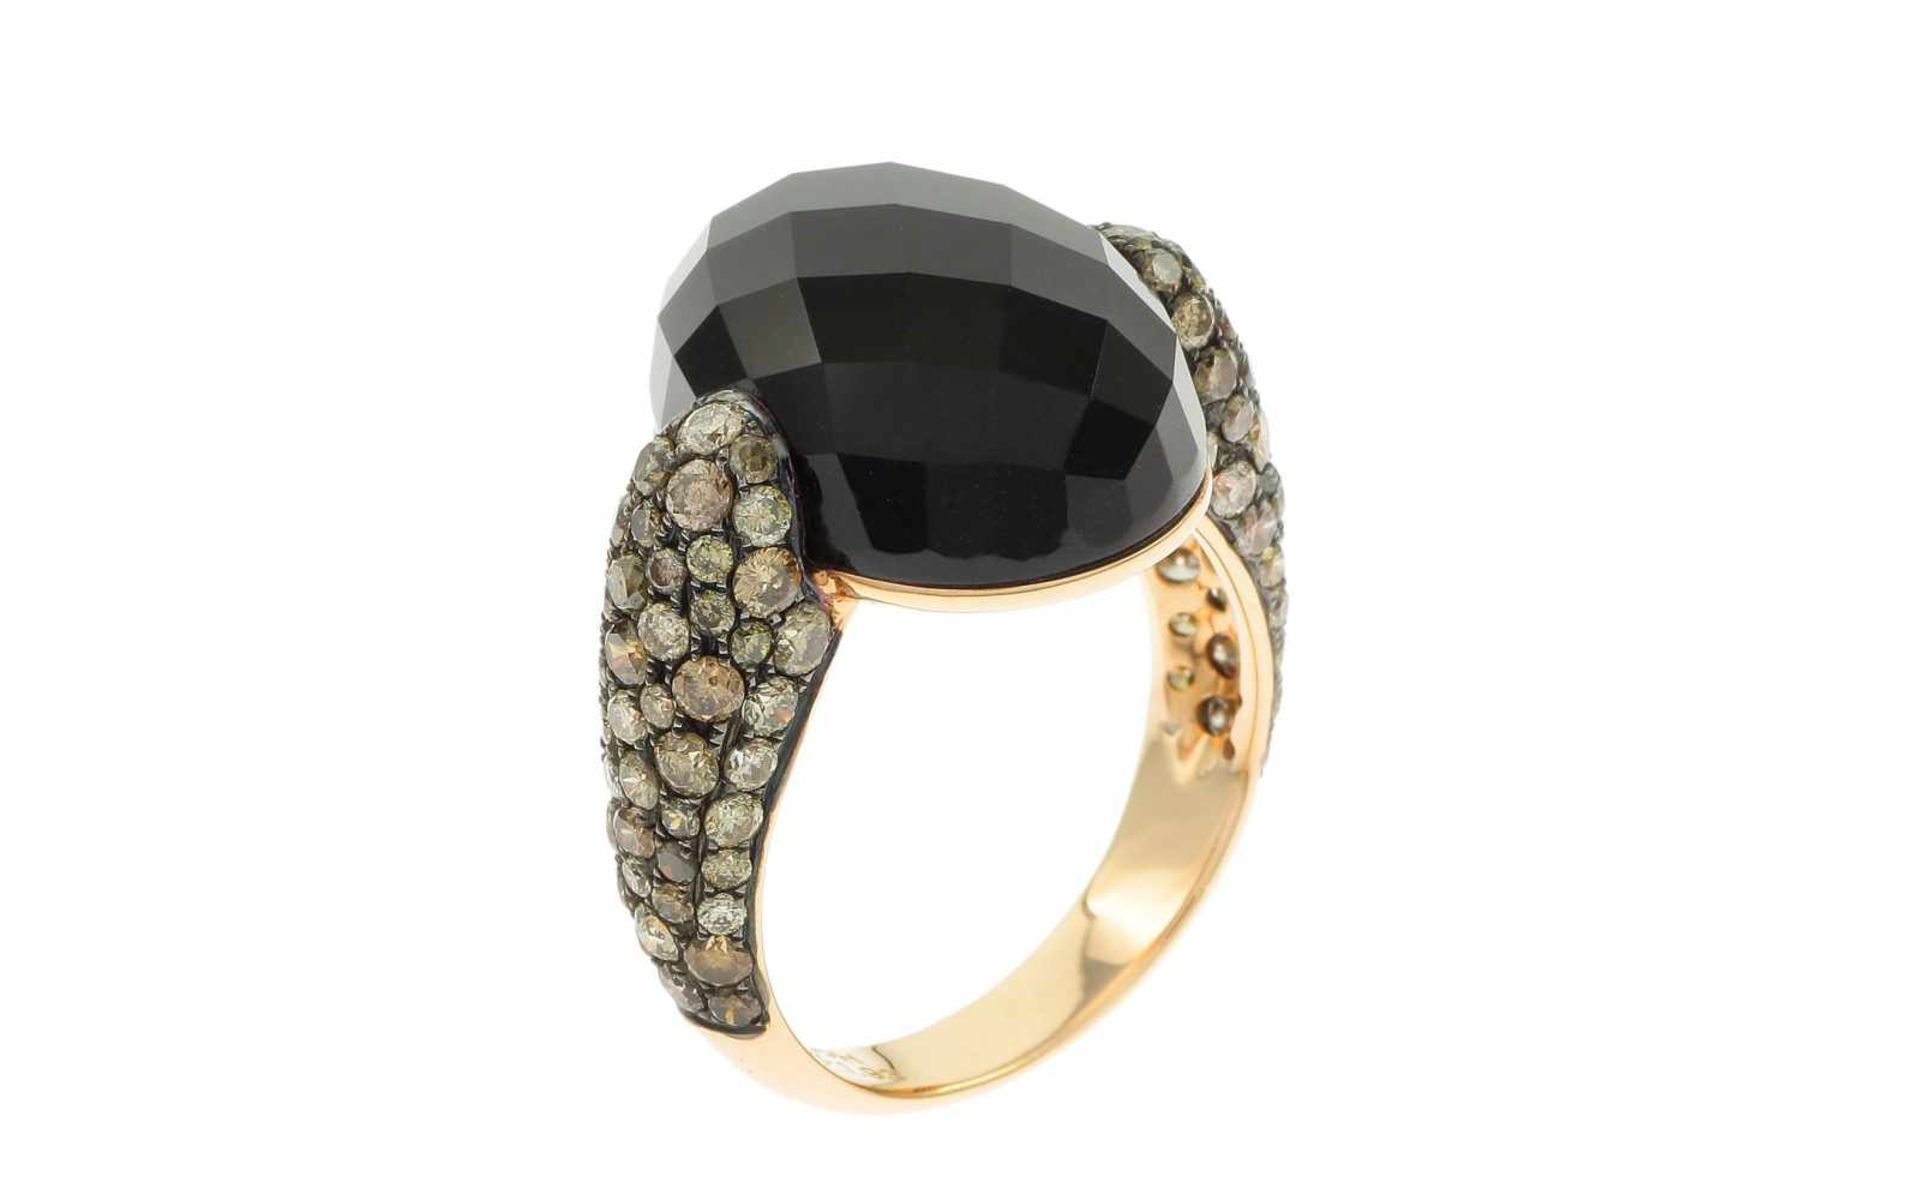 Onyxring Ring 18K RG mit 1,93 ct braunen Diamanten B/si-pi und Onyx oval facettiert 12,65 ct, RW: